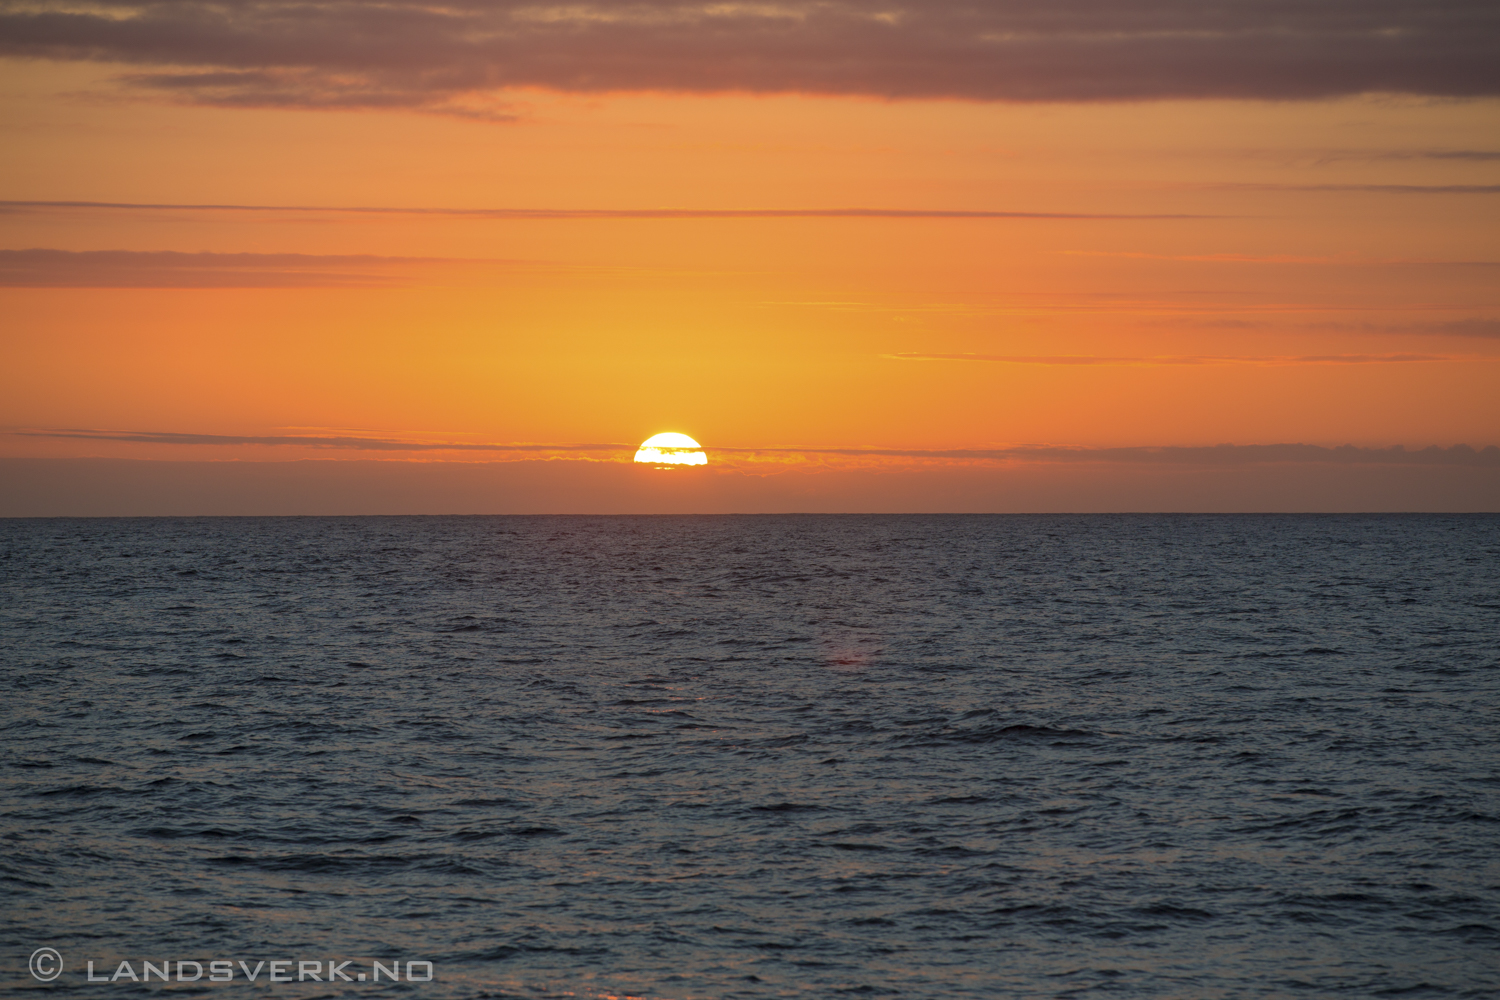 Sailing between the Galapagos Islands. 

(Canon EOS 5D Mark III / Canon EF 70-200mm f/2.8 L IS II USM)